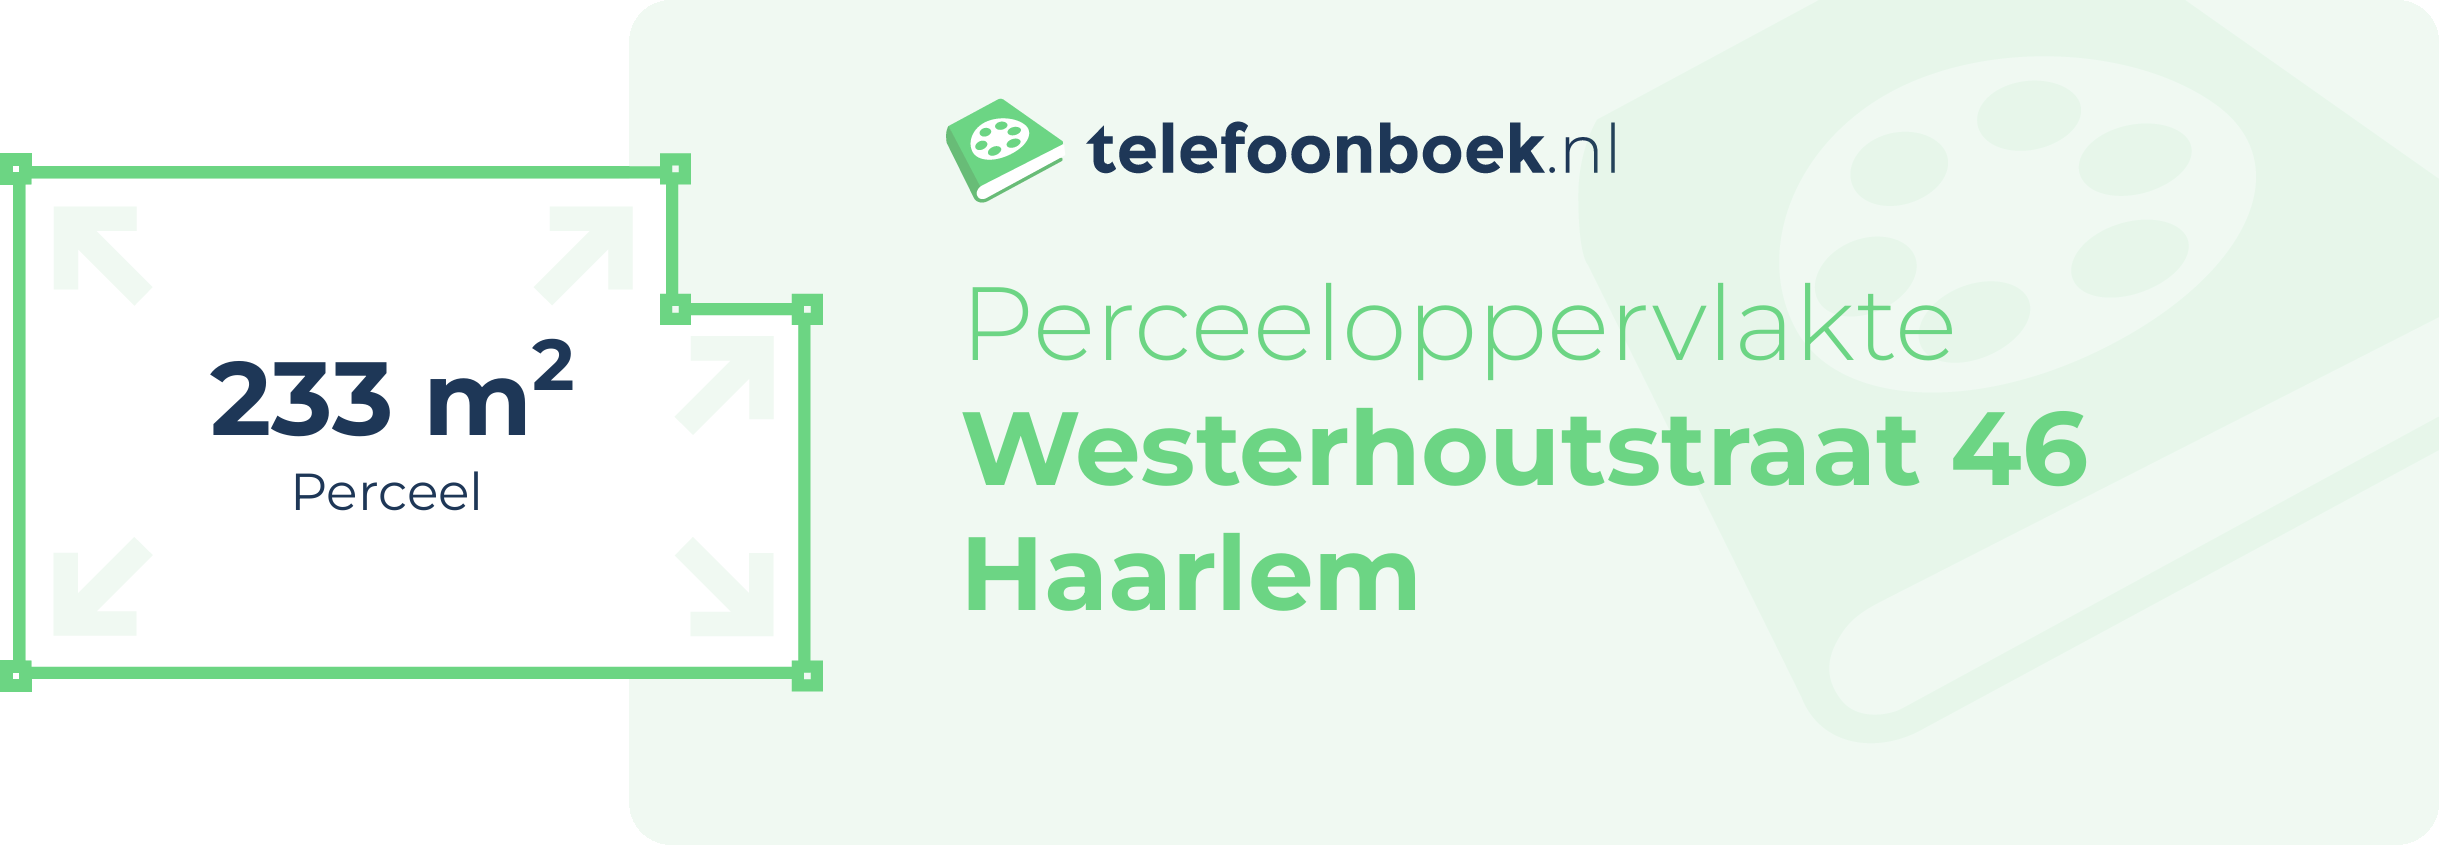 Perceeloppervlakte Westerhoutstraat 46 Haarlem